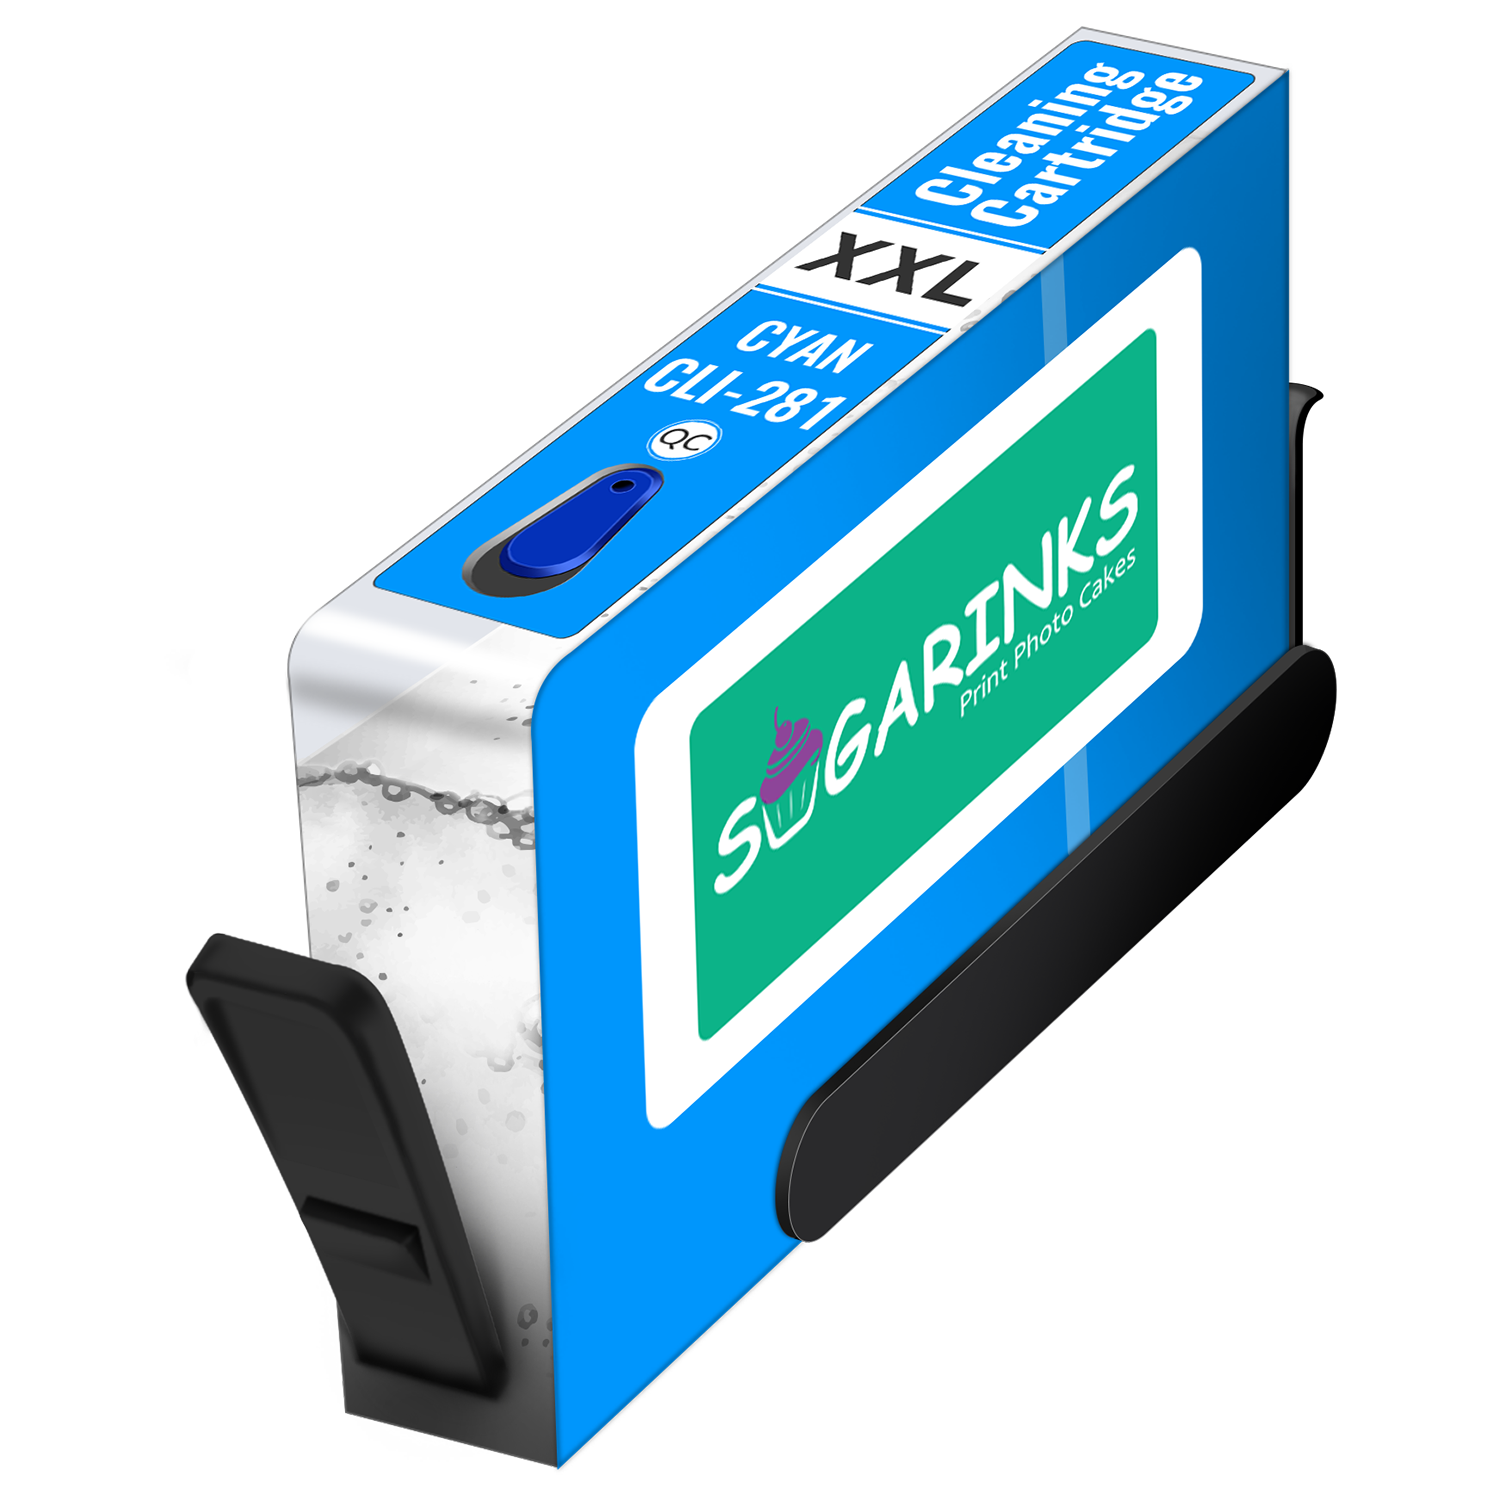 Sugarinks Edible Cleaning Cartridge CLI-281XL for Canon Edible Printer – Cyan